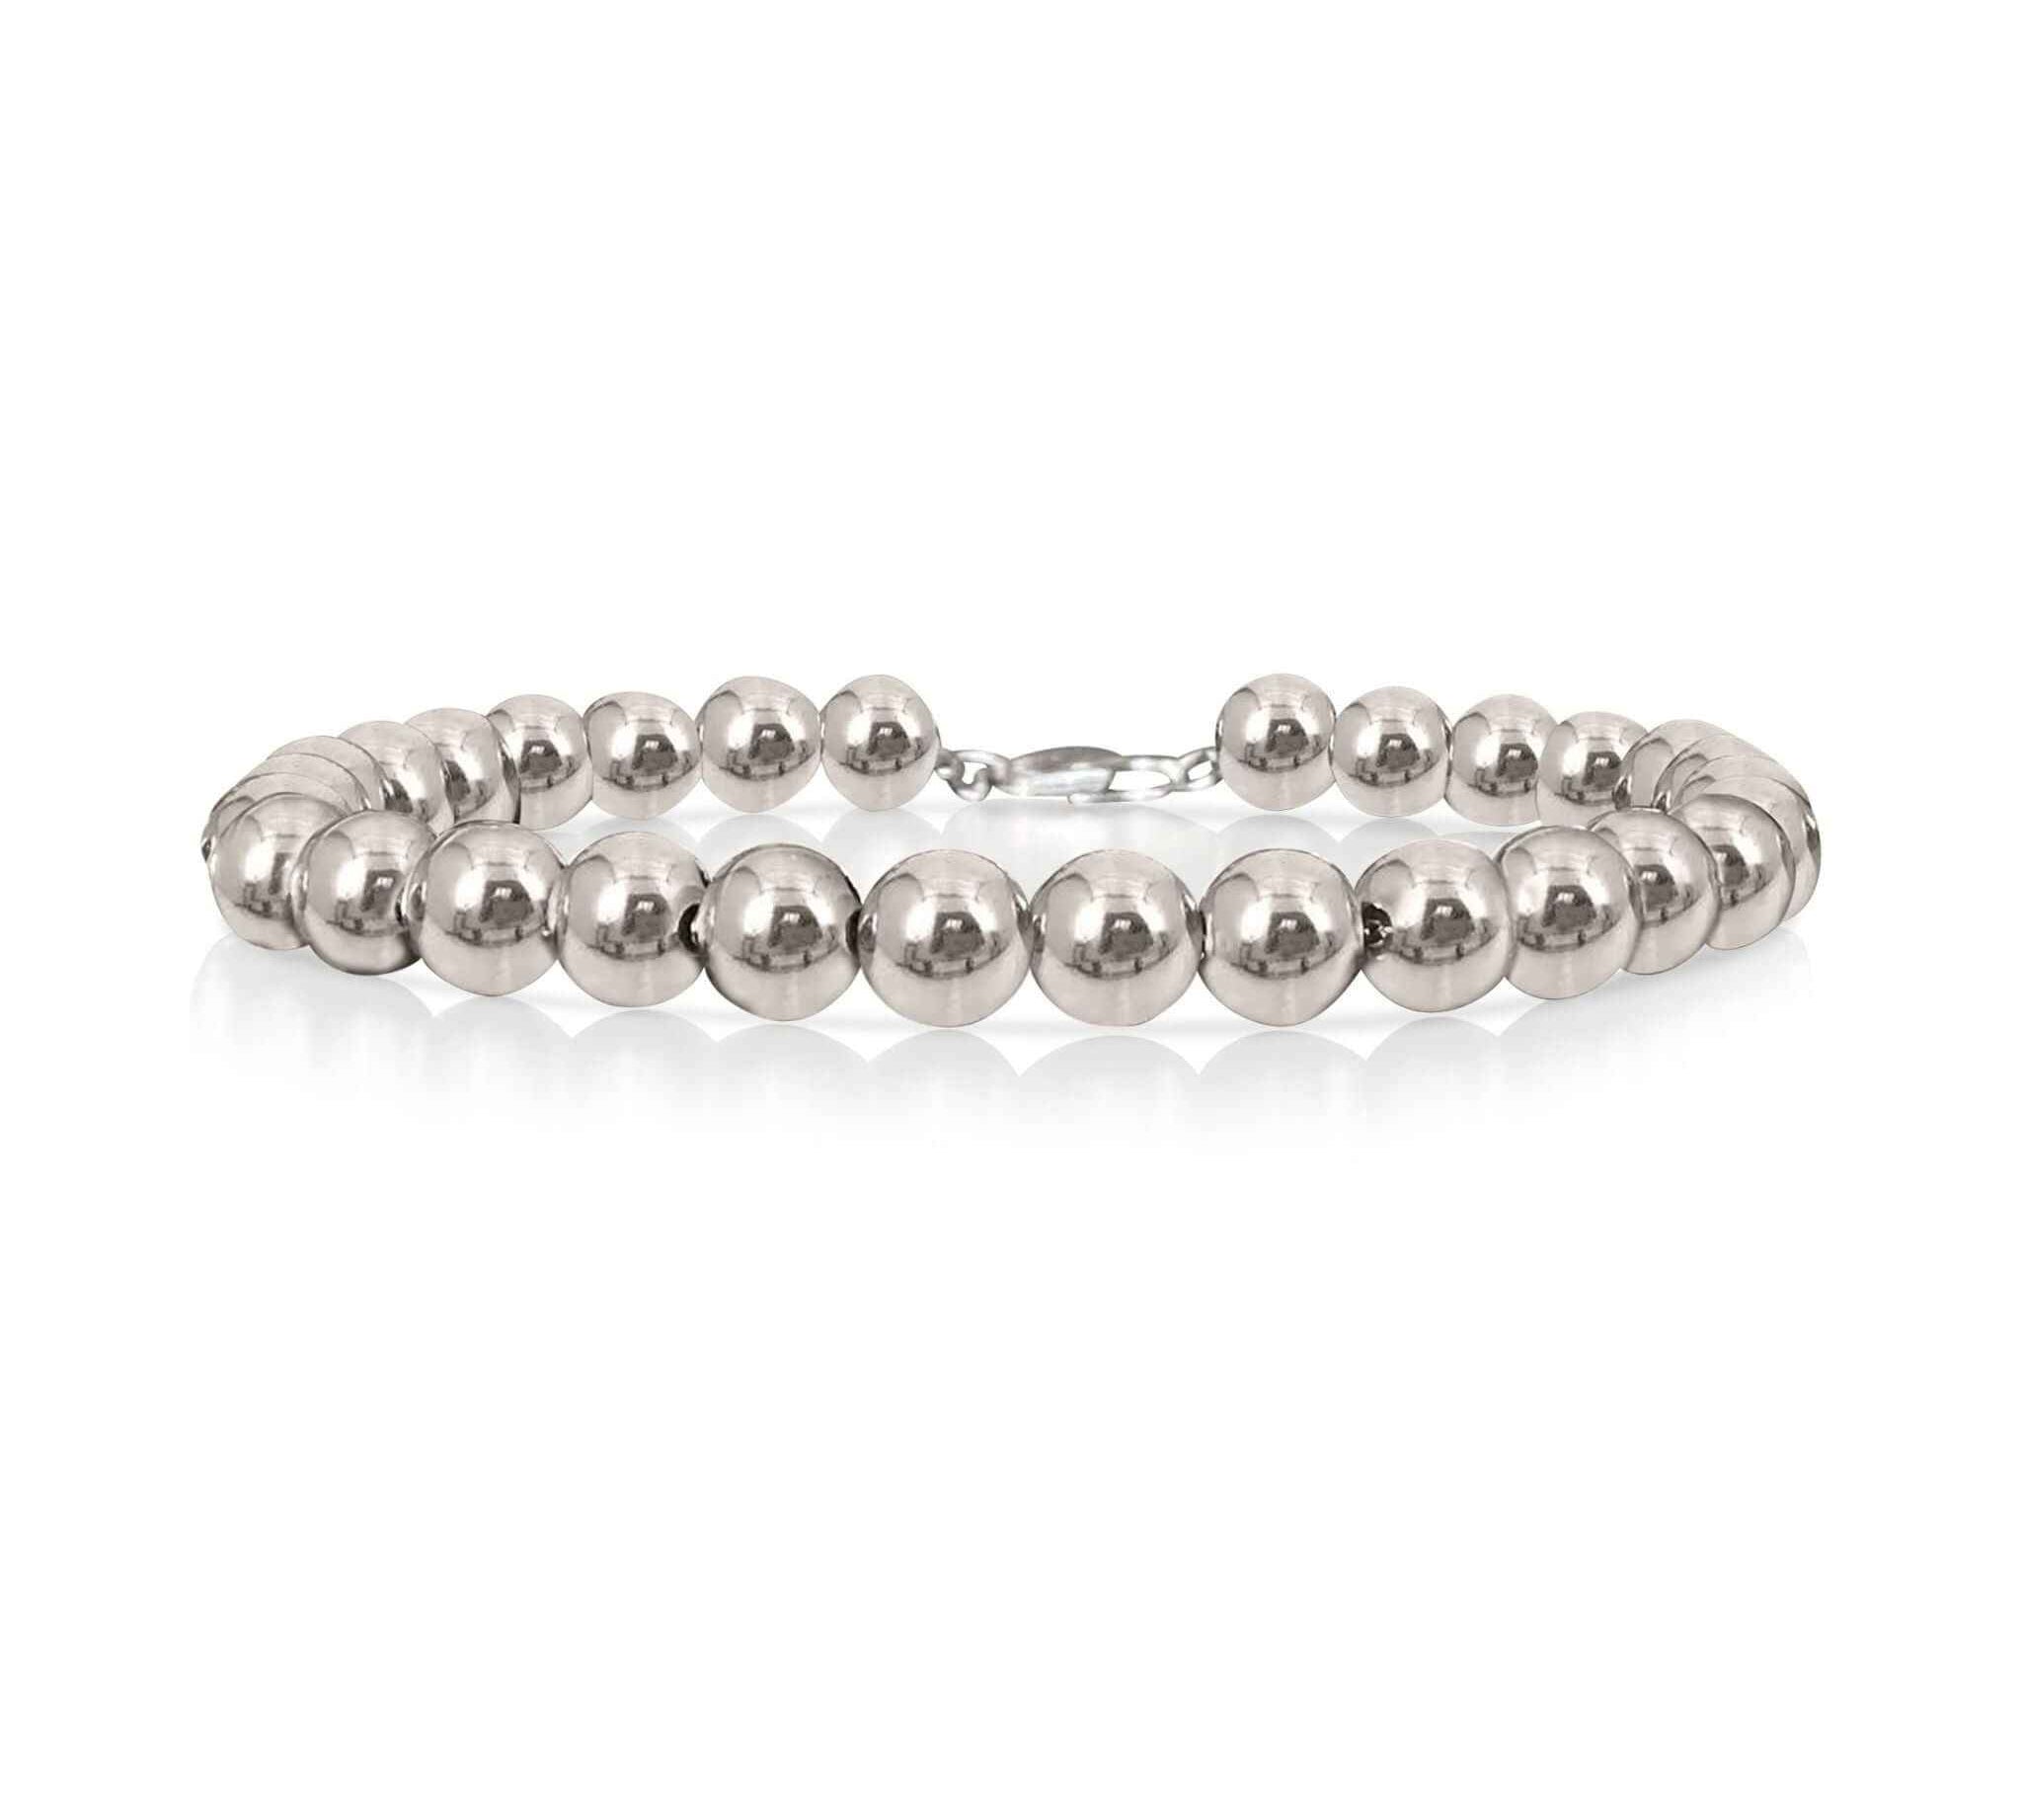 Elegant 4mm sterling silver beaded bracelet by Alessandra James.